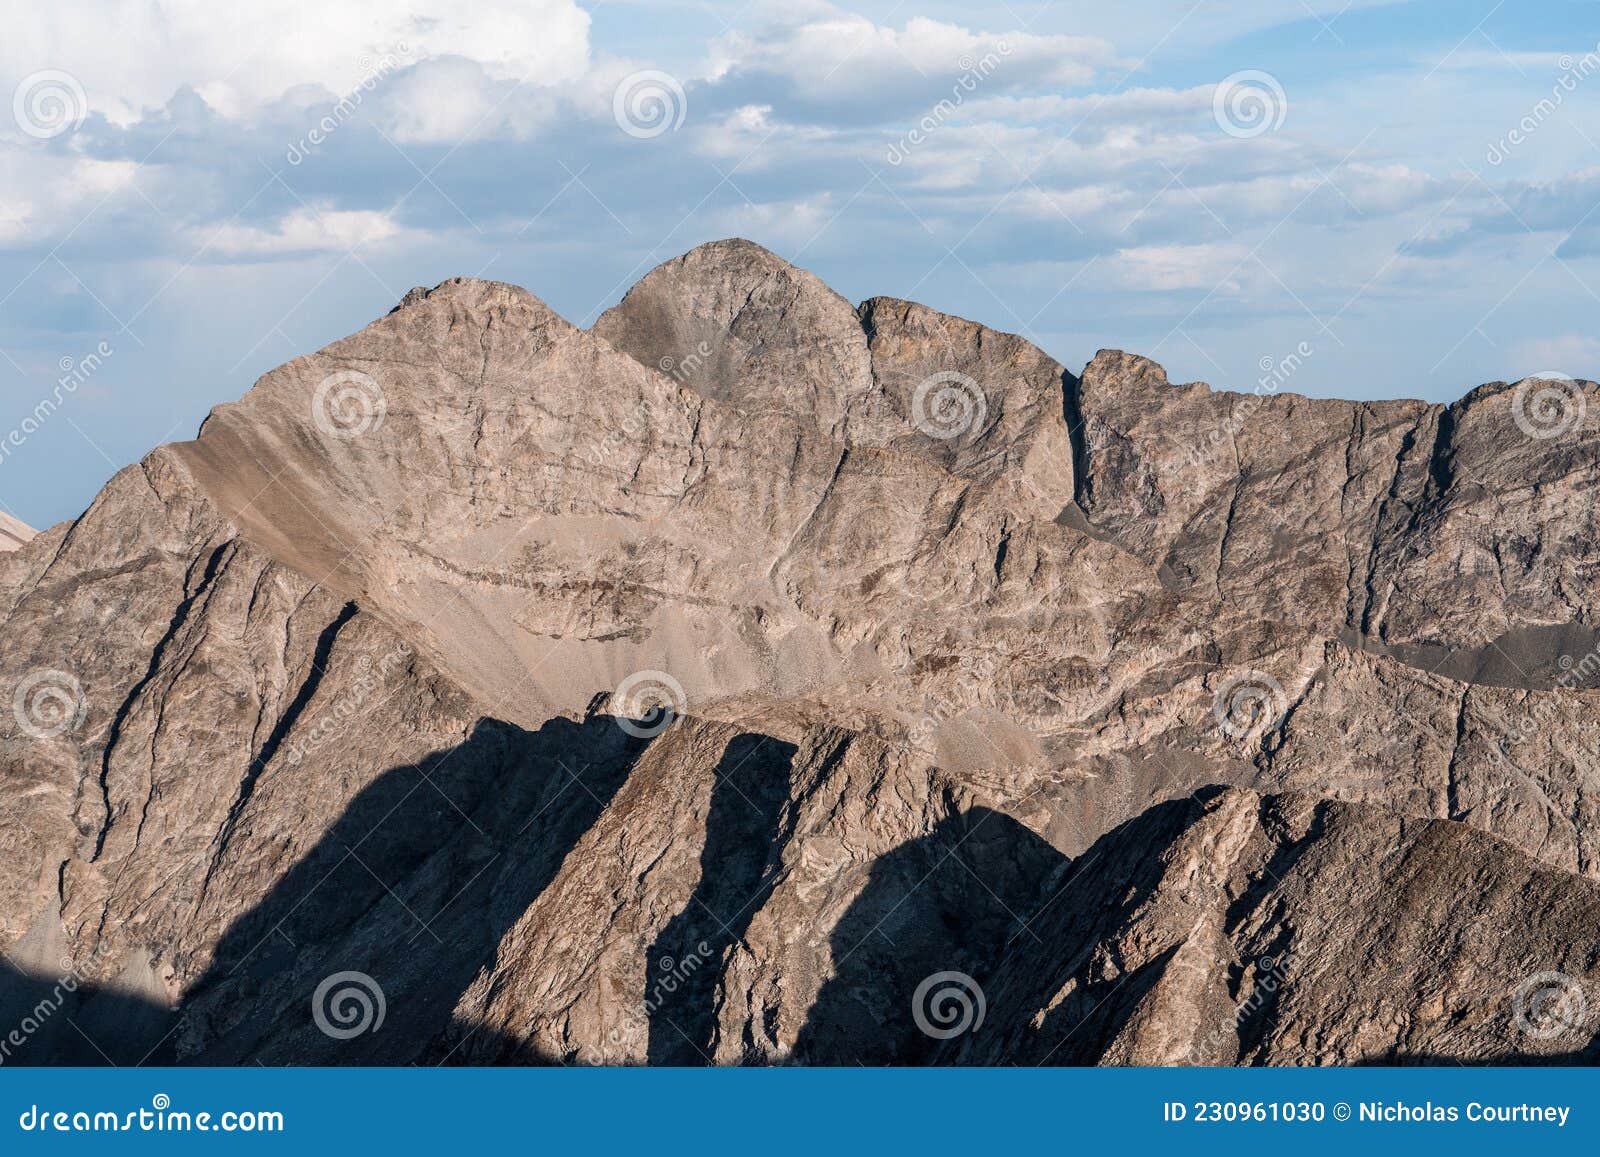 blanca peak and little bear peak. sangre de cristo mountains, colorado rockies